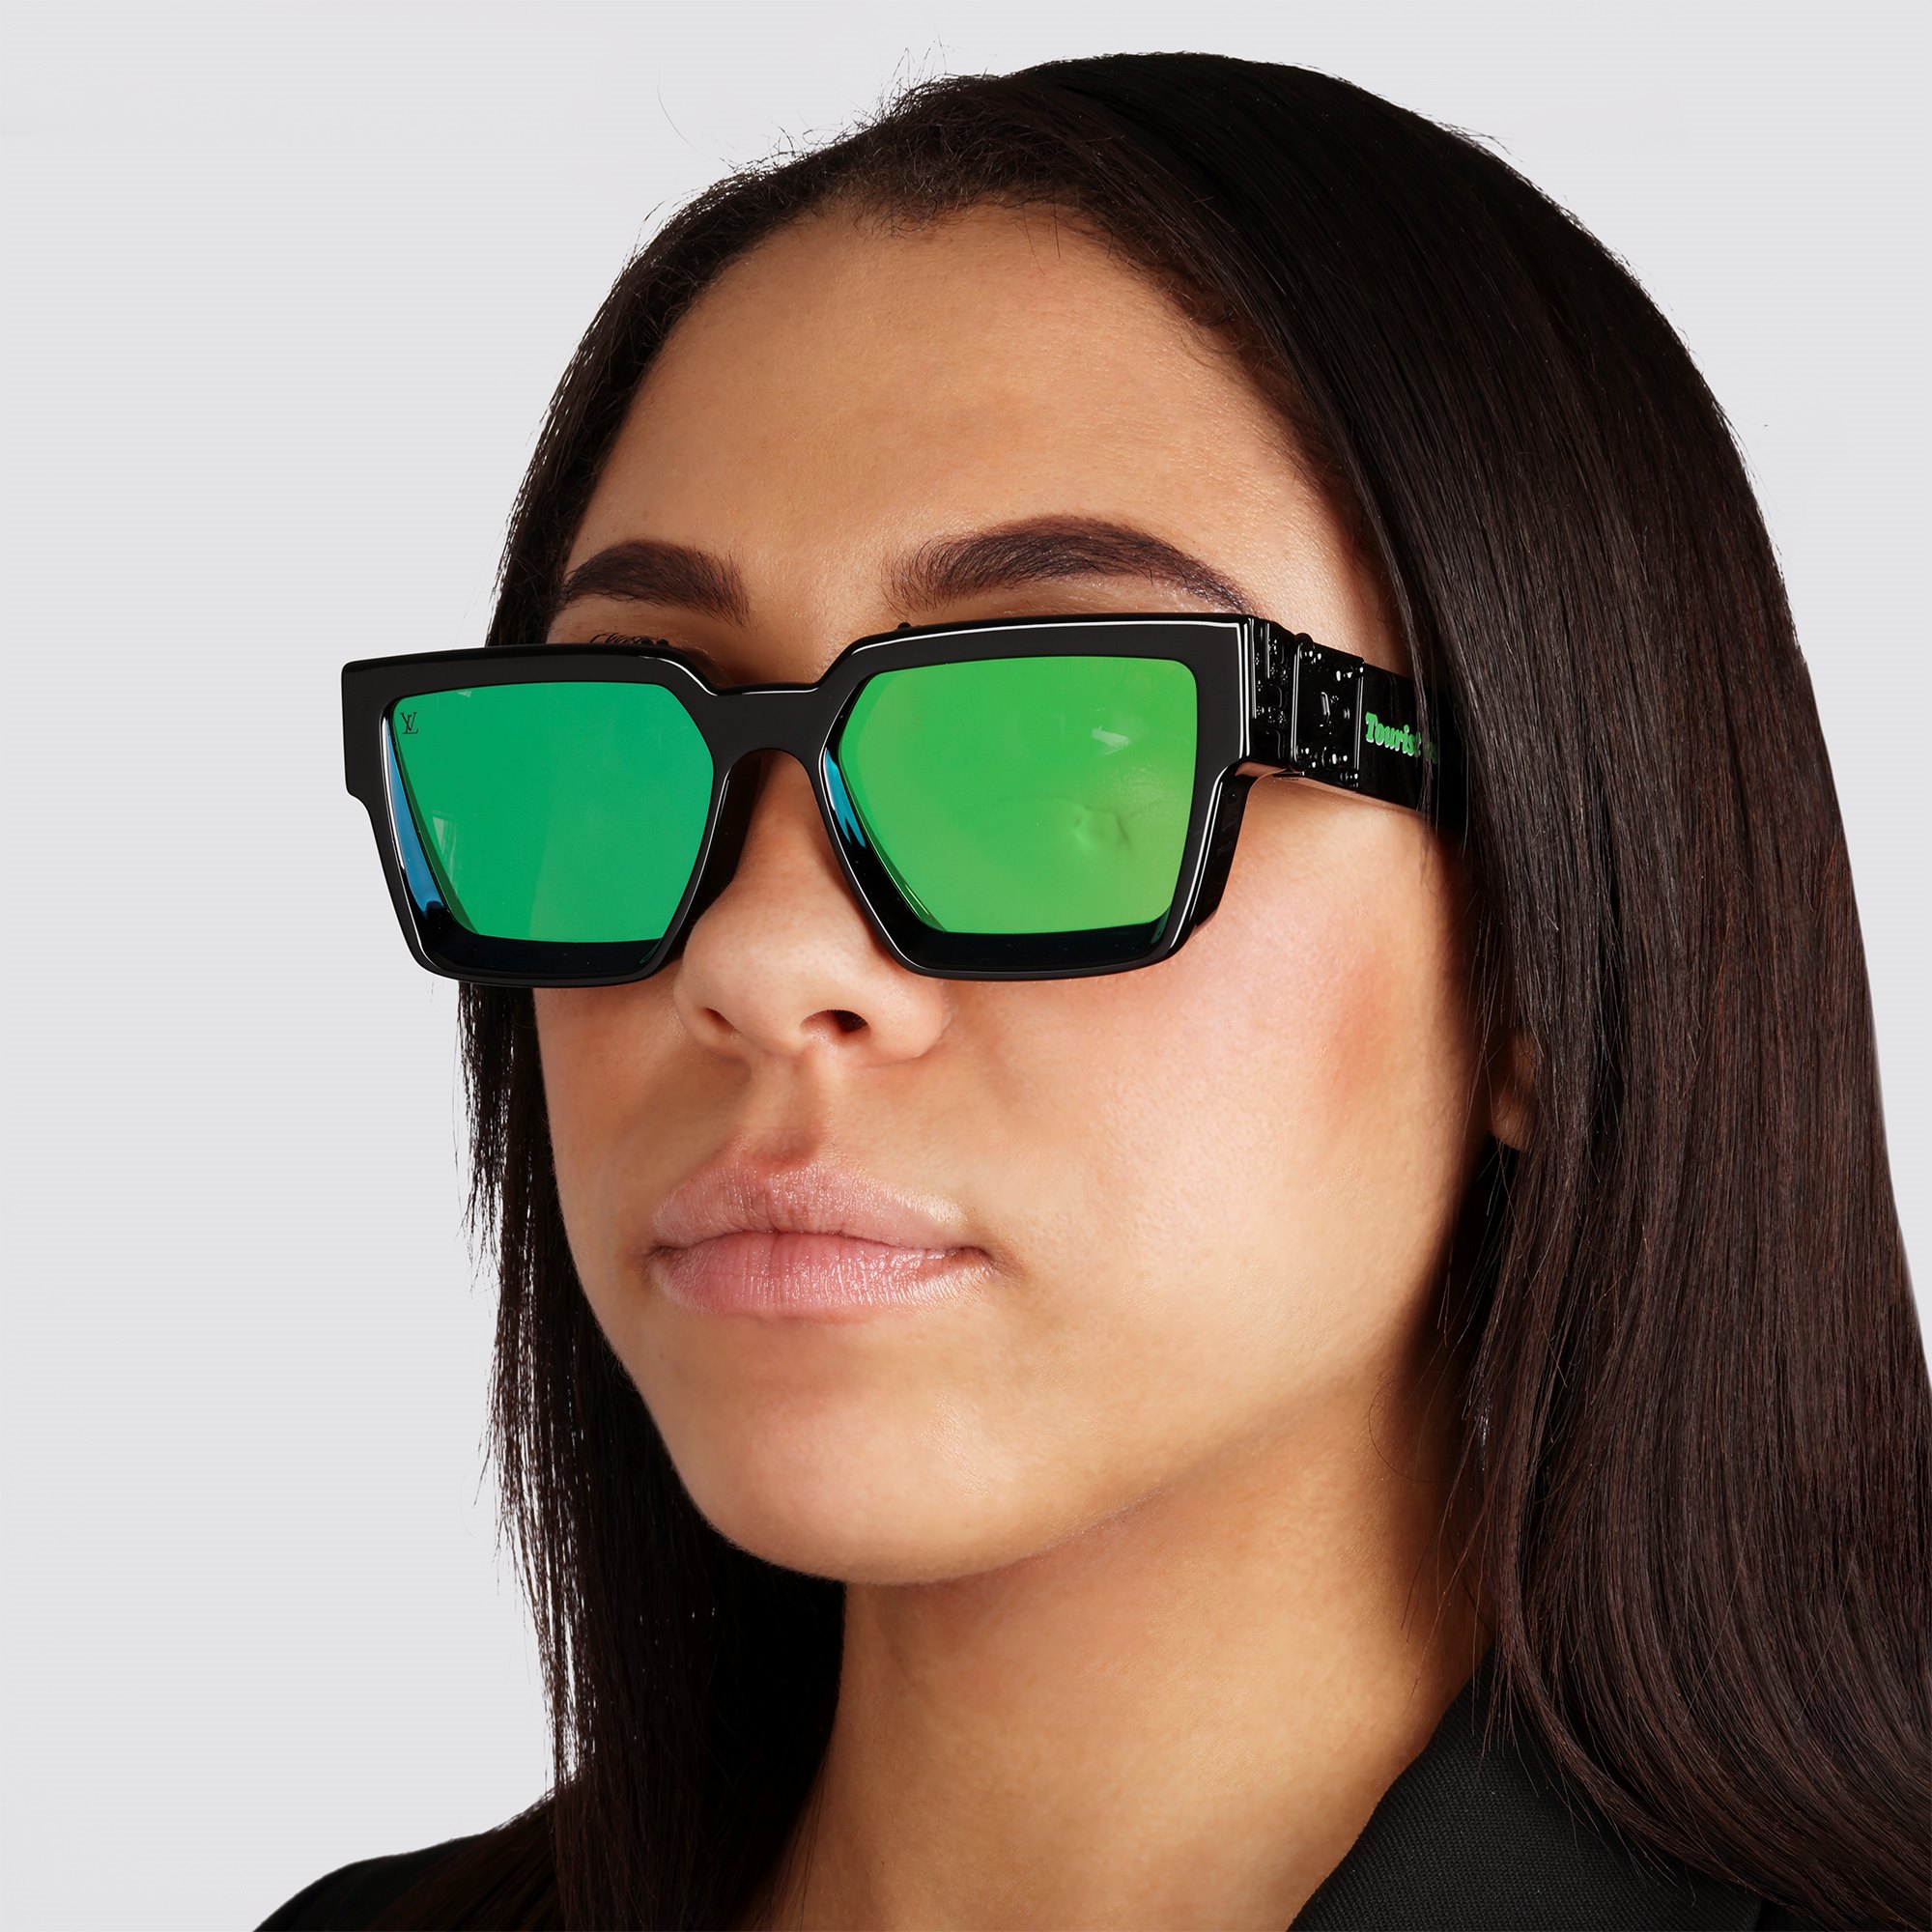 1.1 millionnaires sunglasses Louis Vuitton Green in Plastic - 33429522